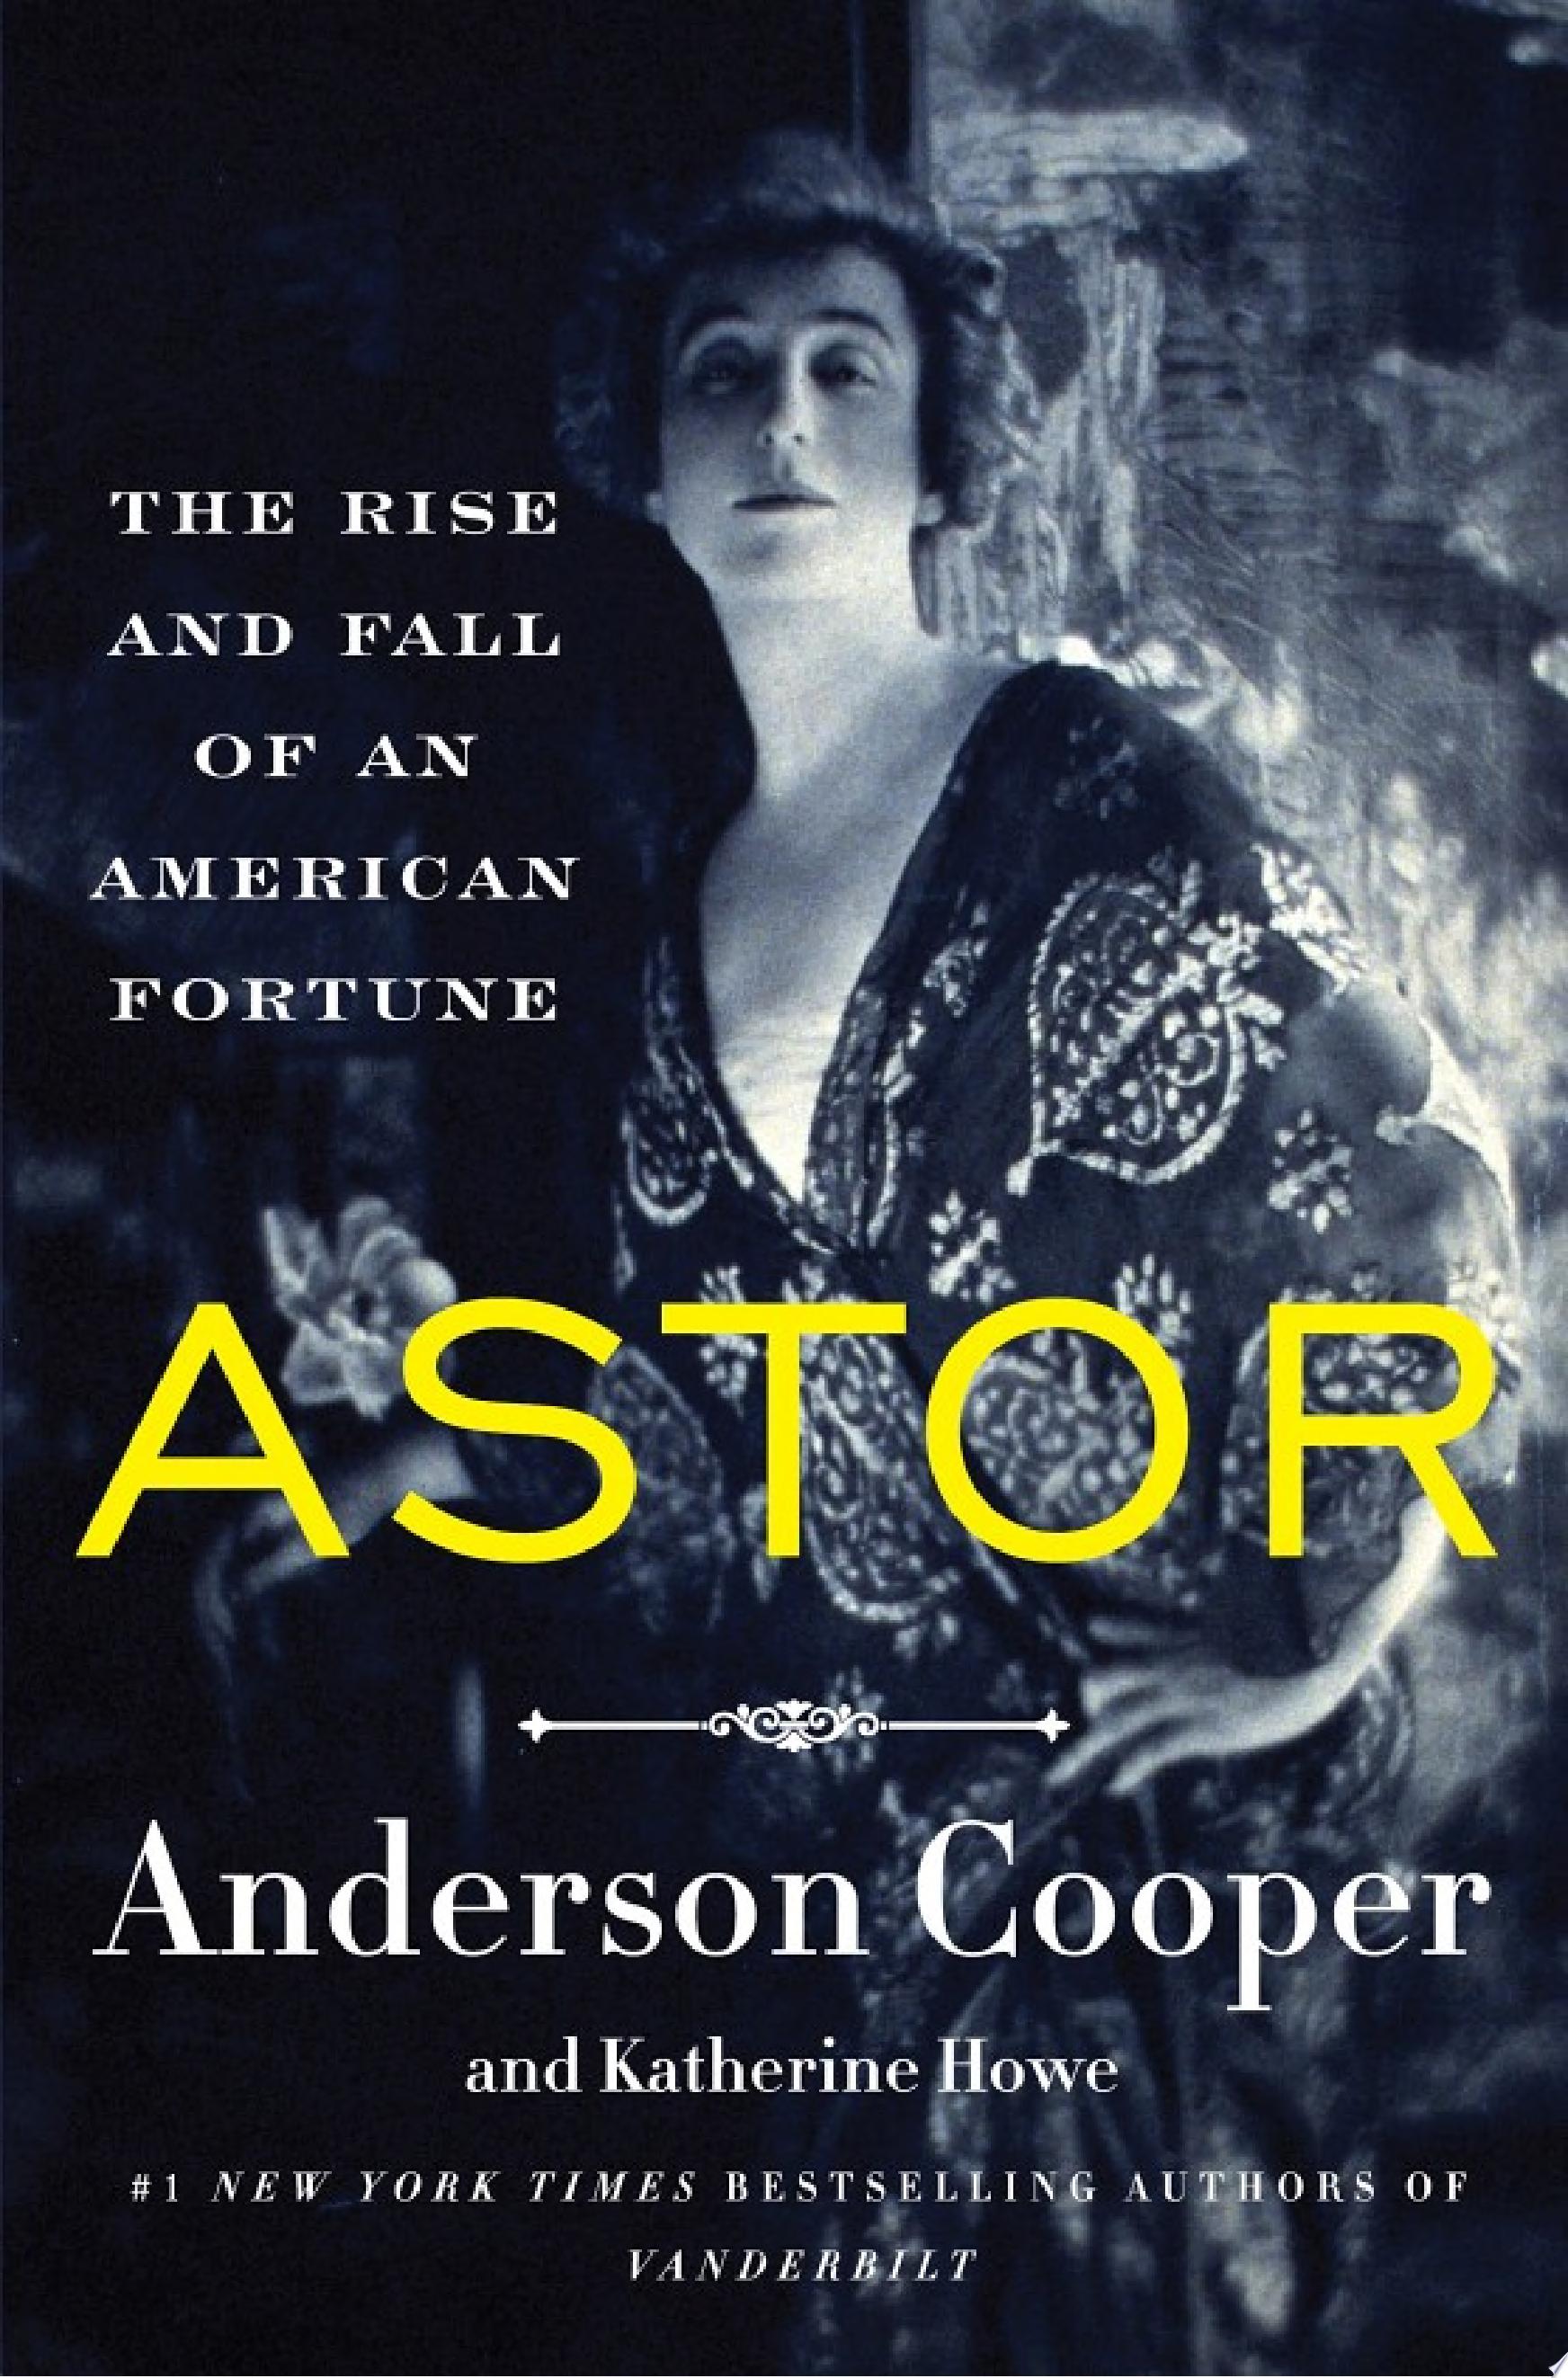 Image for "Astor"